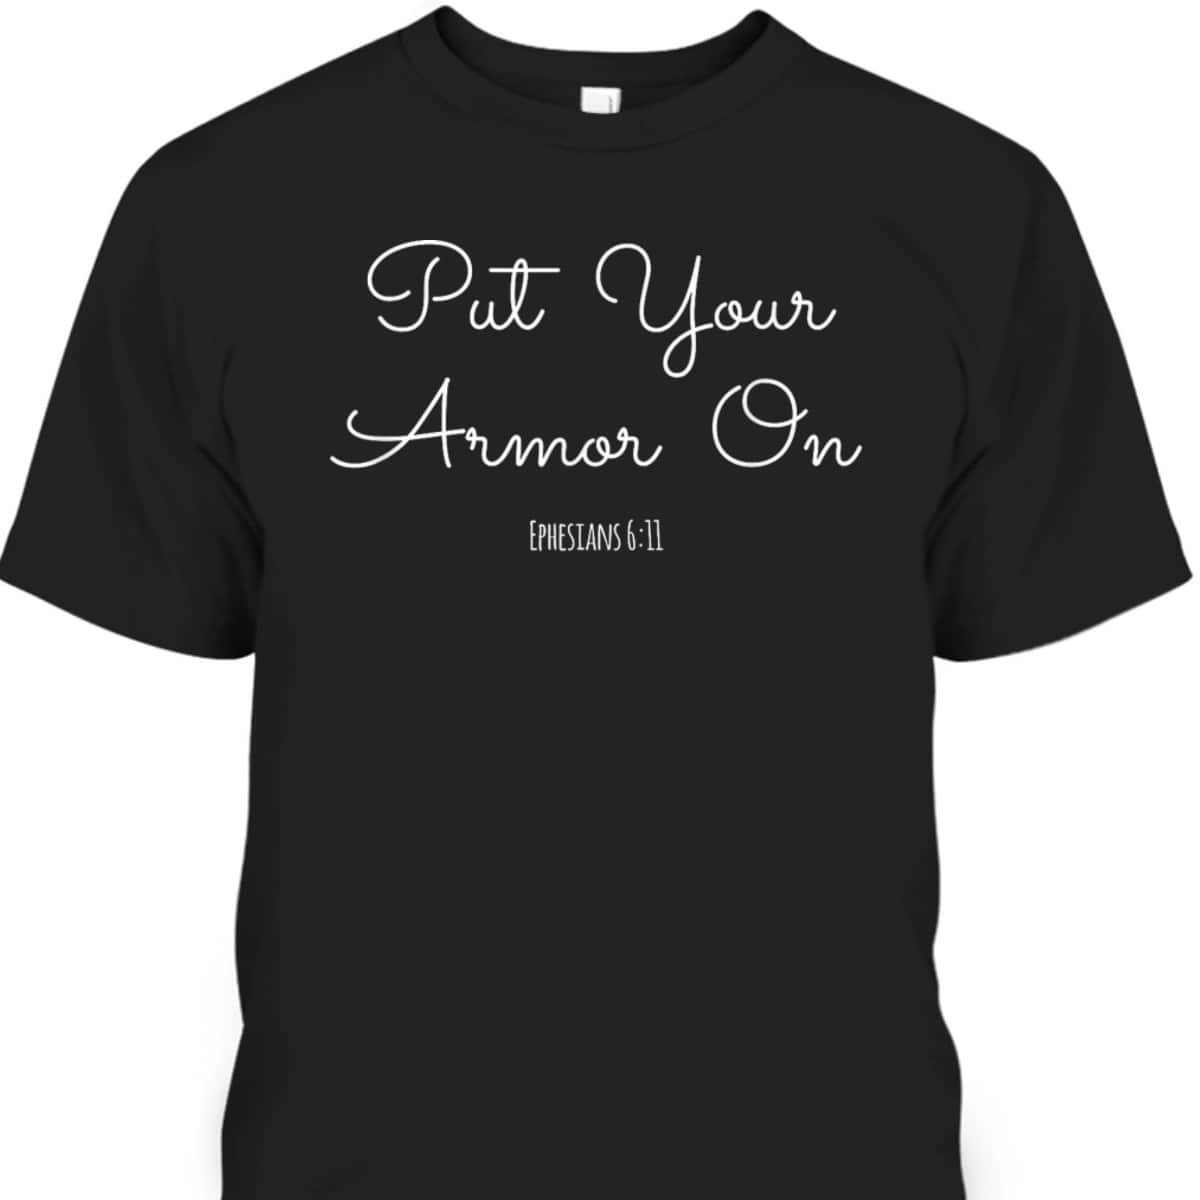 Put Your Armor On Ephesians 611 Armor Of God Christian T-Shirt